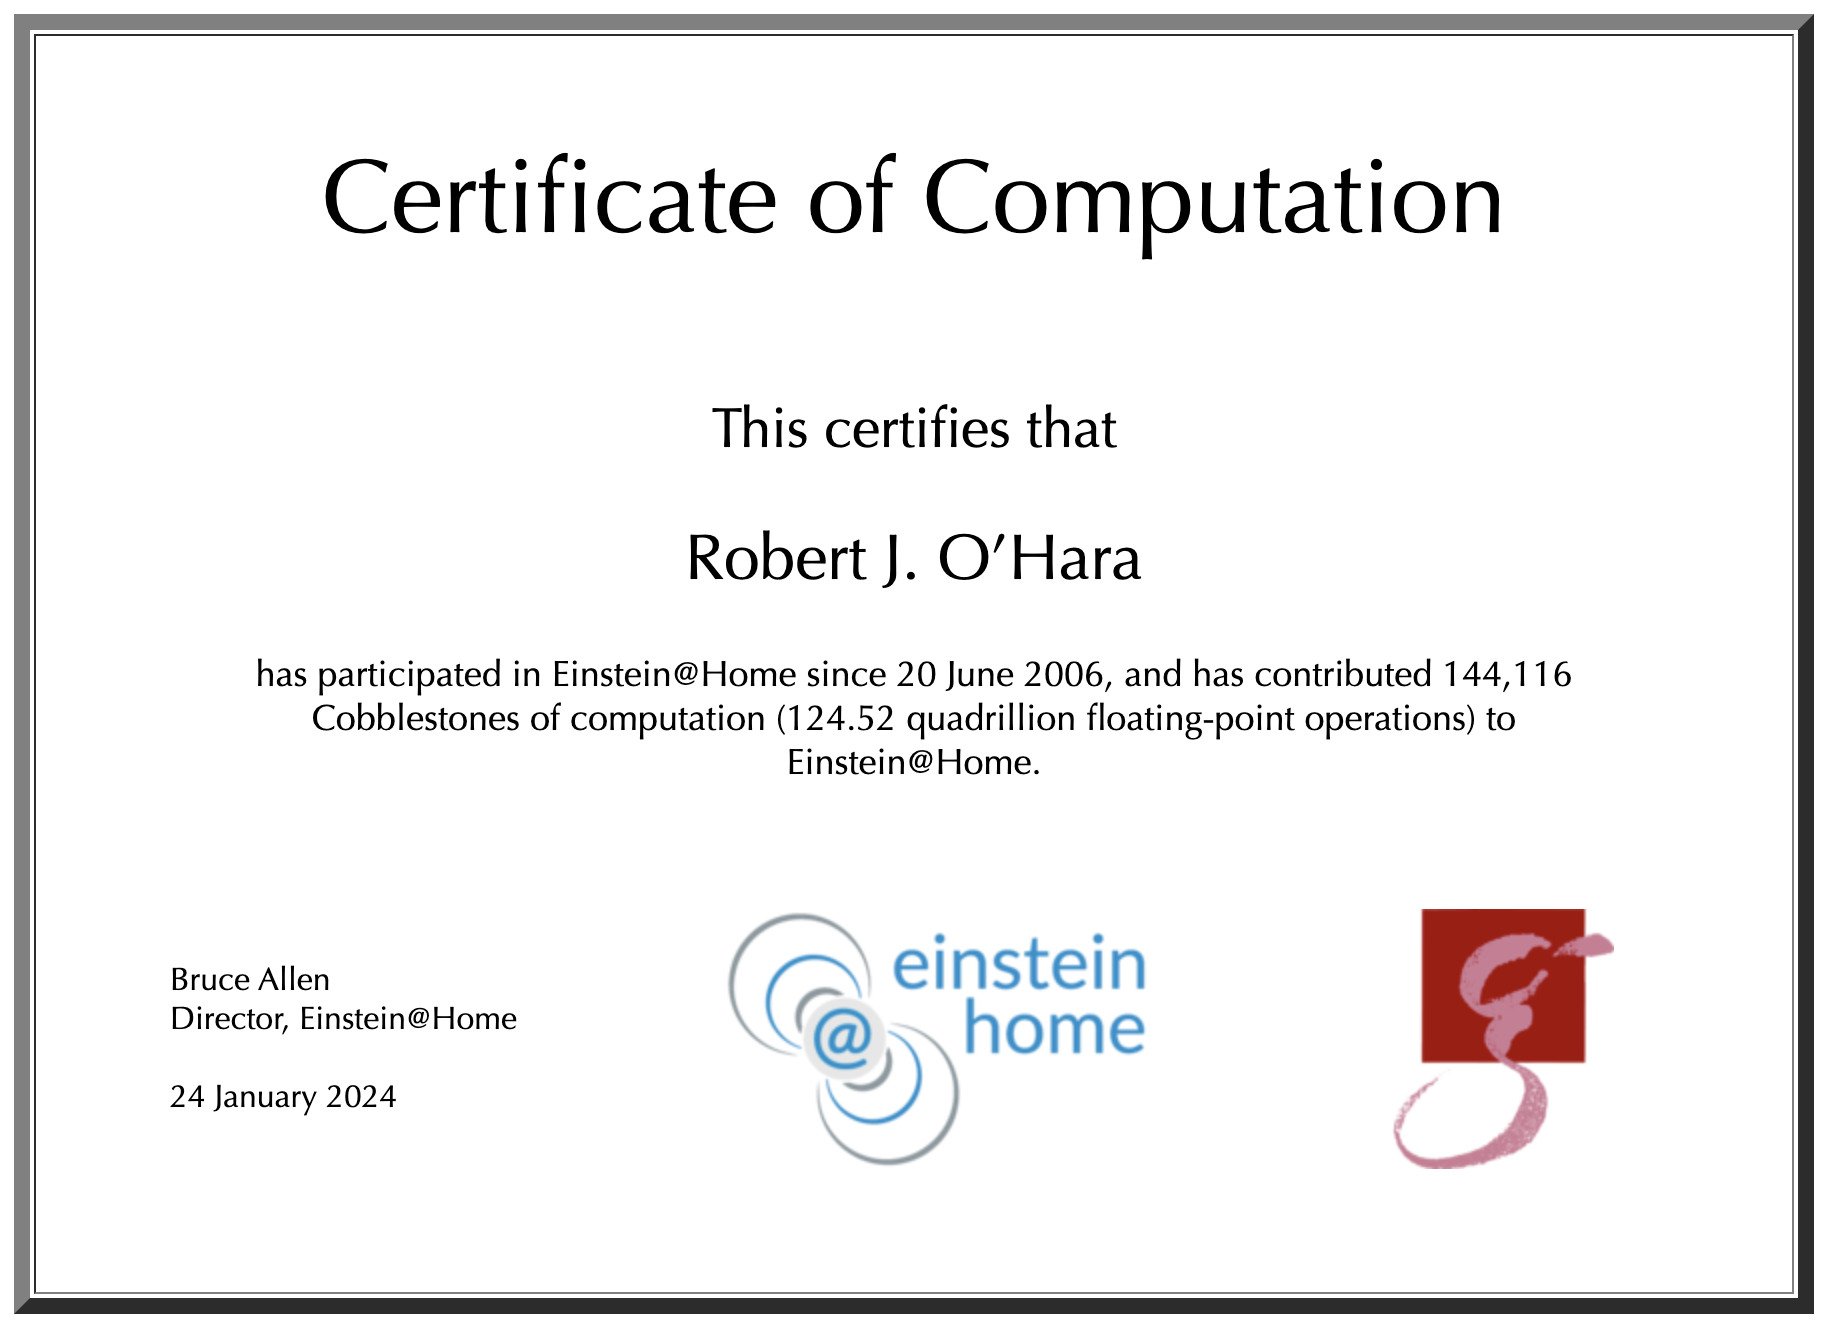 [Certificate of Computation]